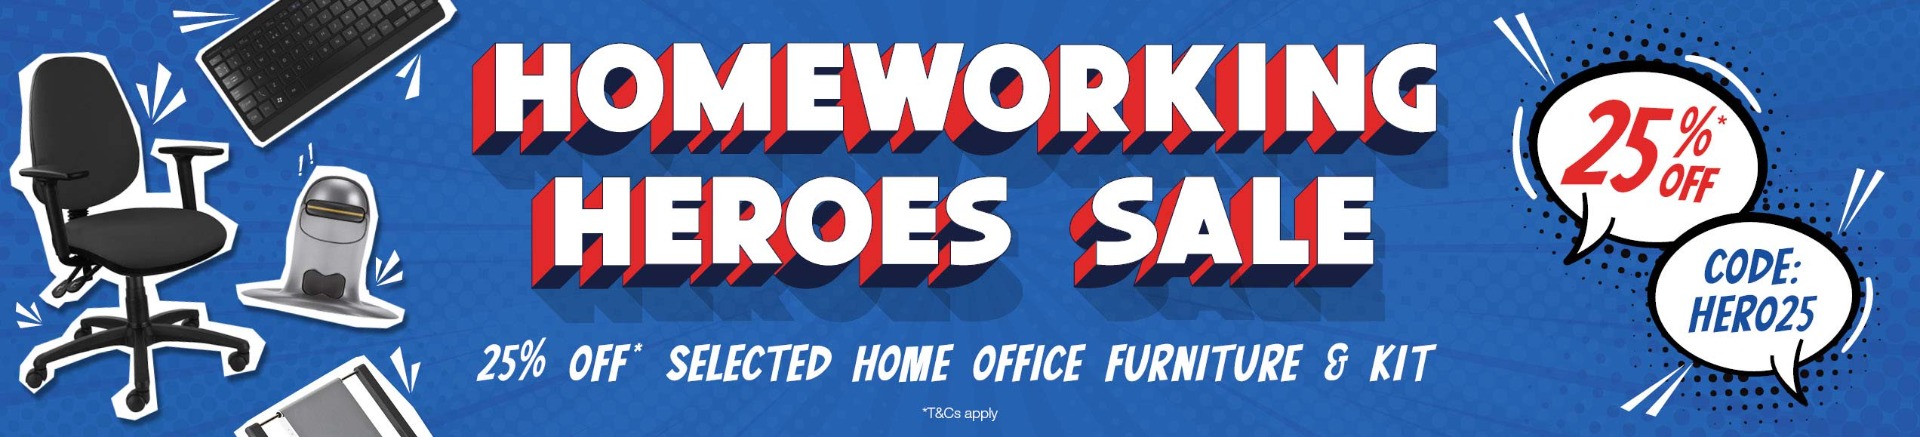 Homeworkin heroes sale